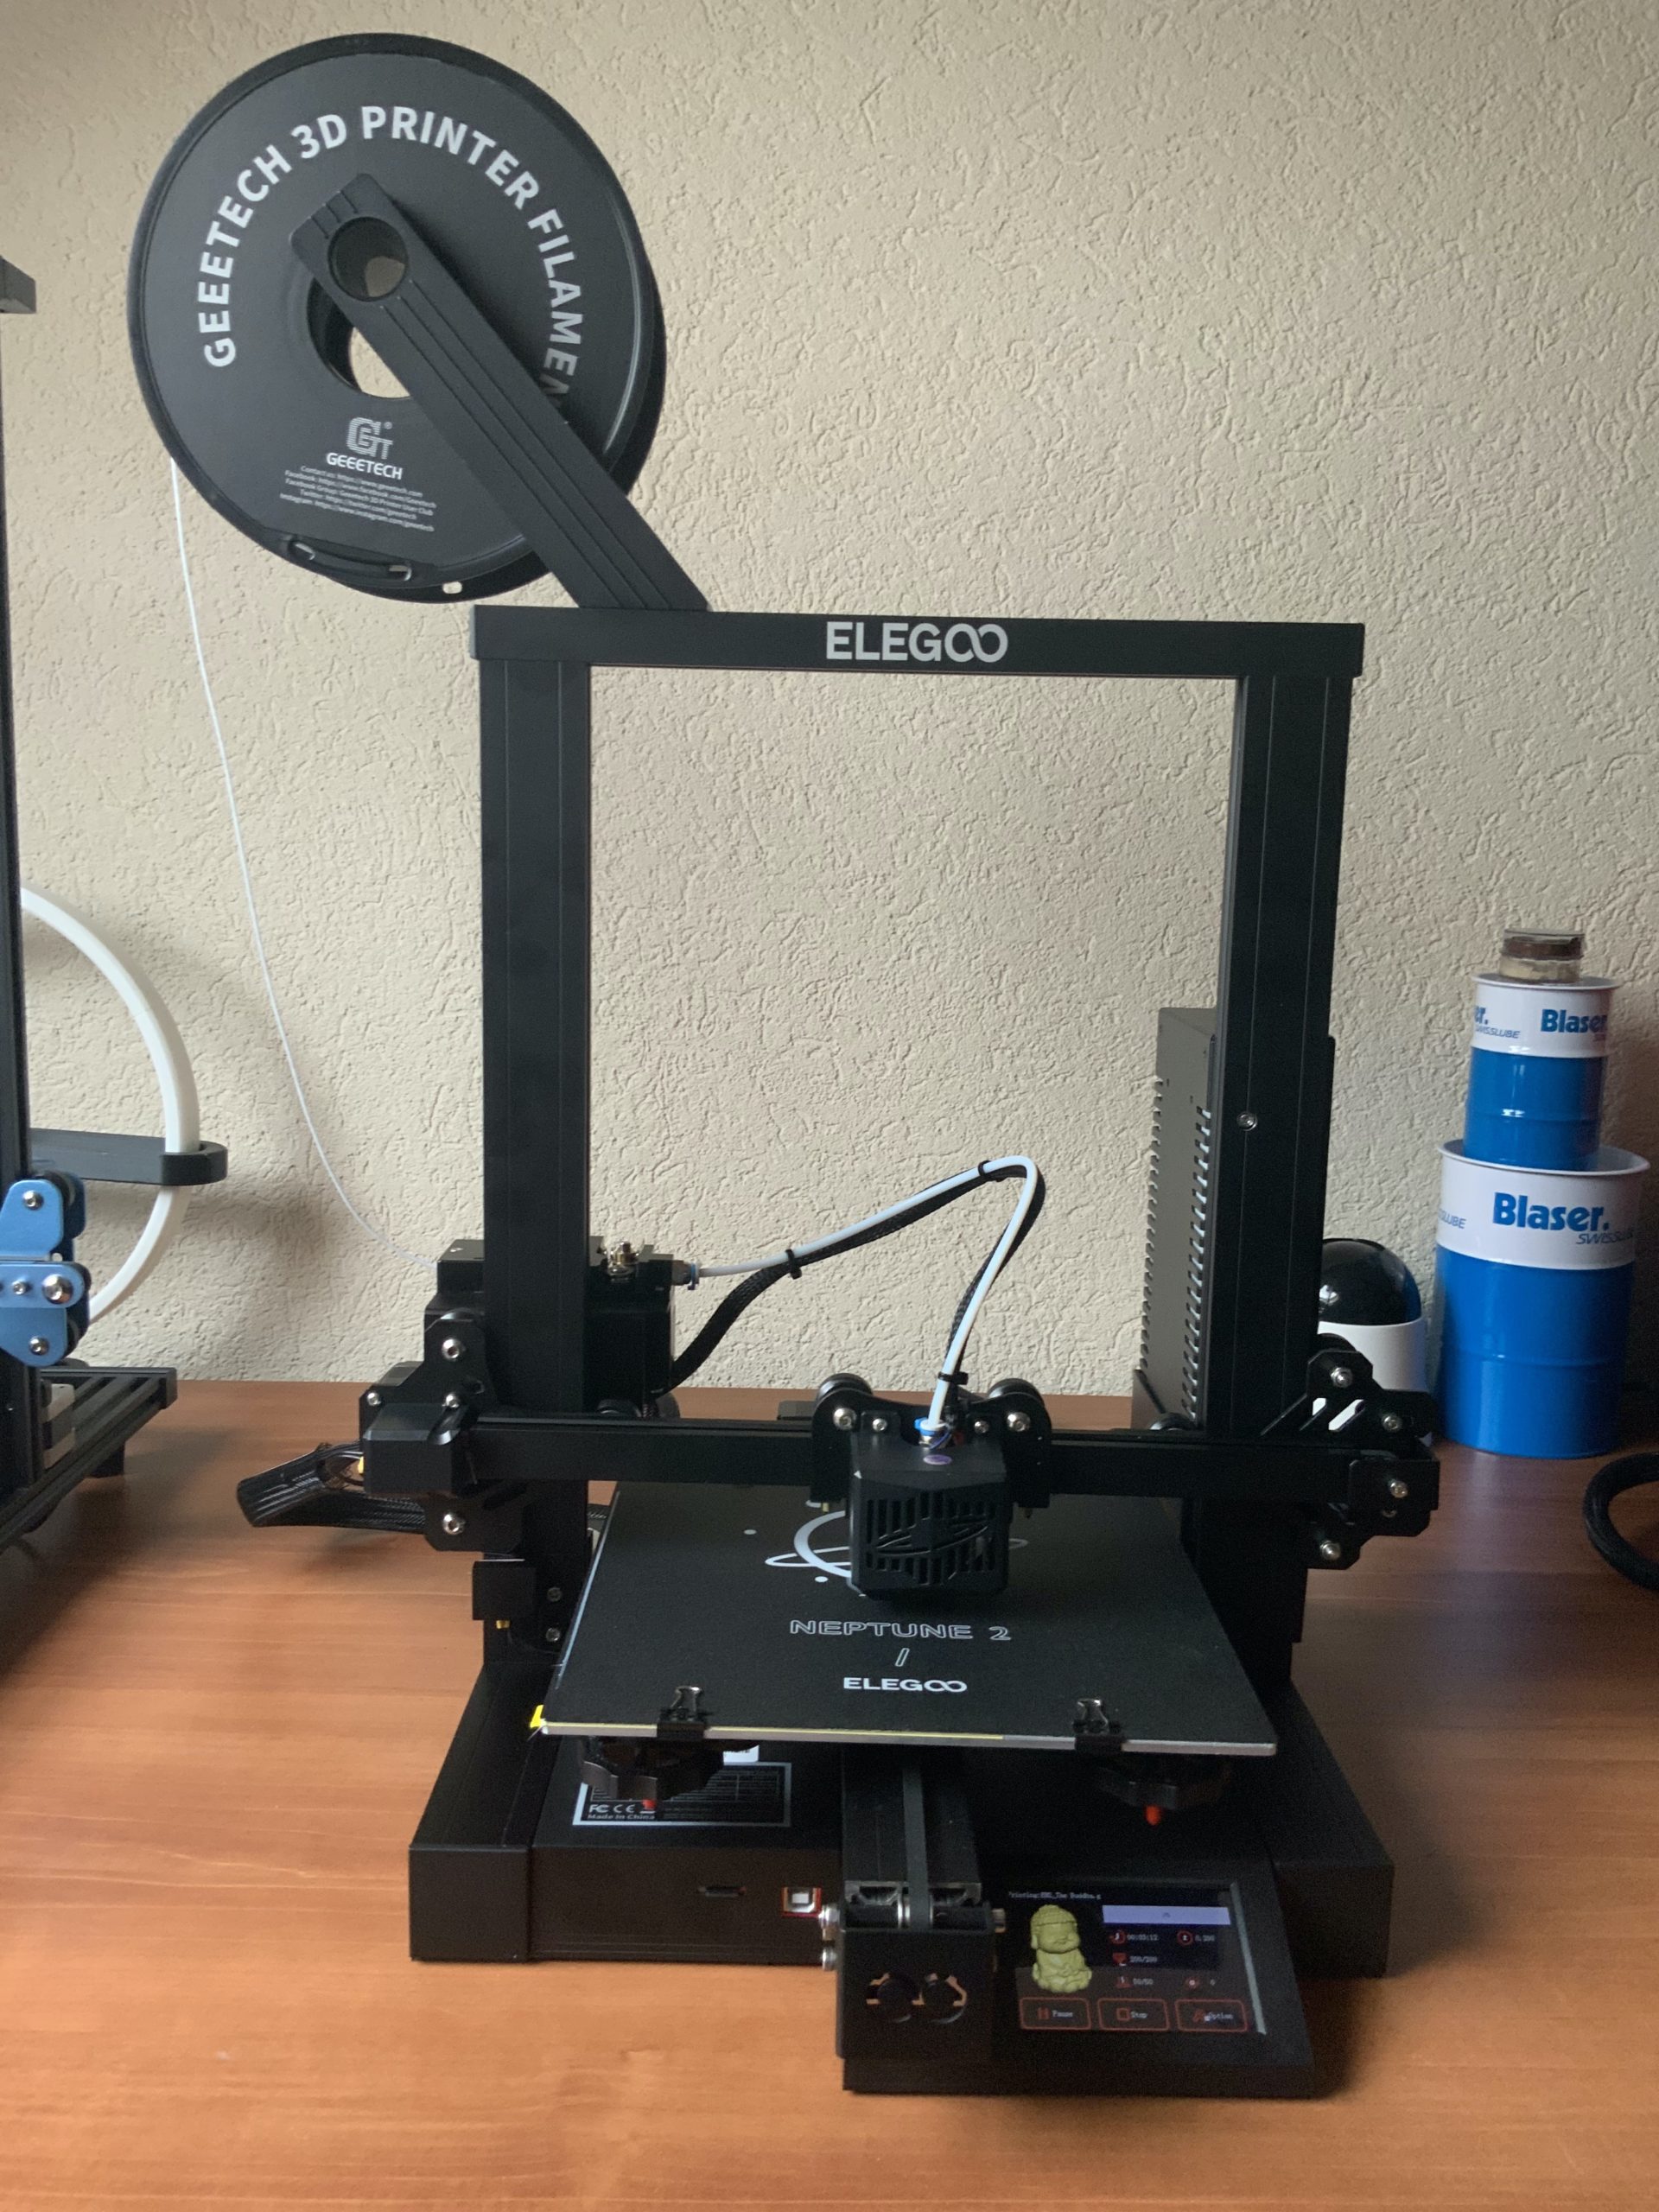 Elegoo Saturn 2 : fiche technique, tutoriel, test, prix imprimante 3D